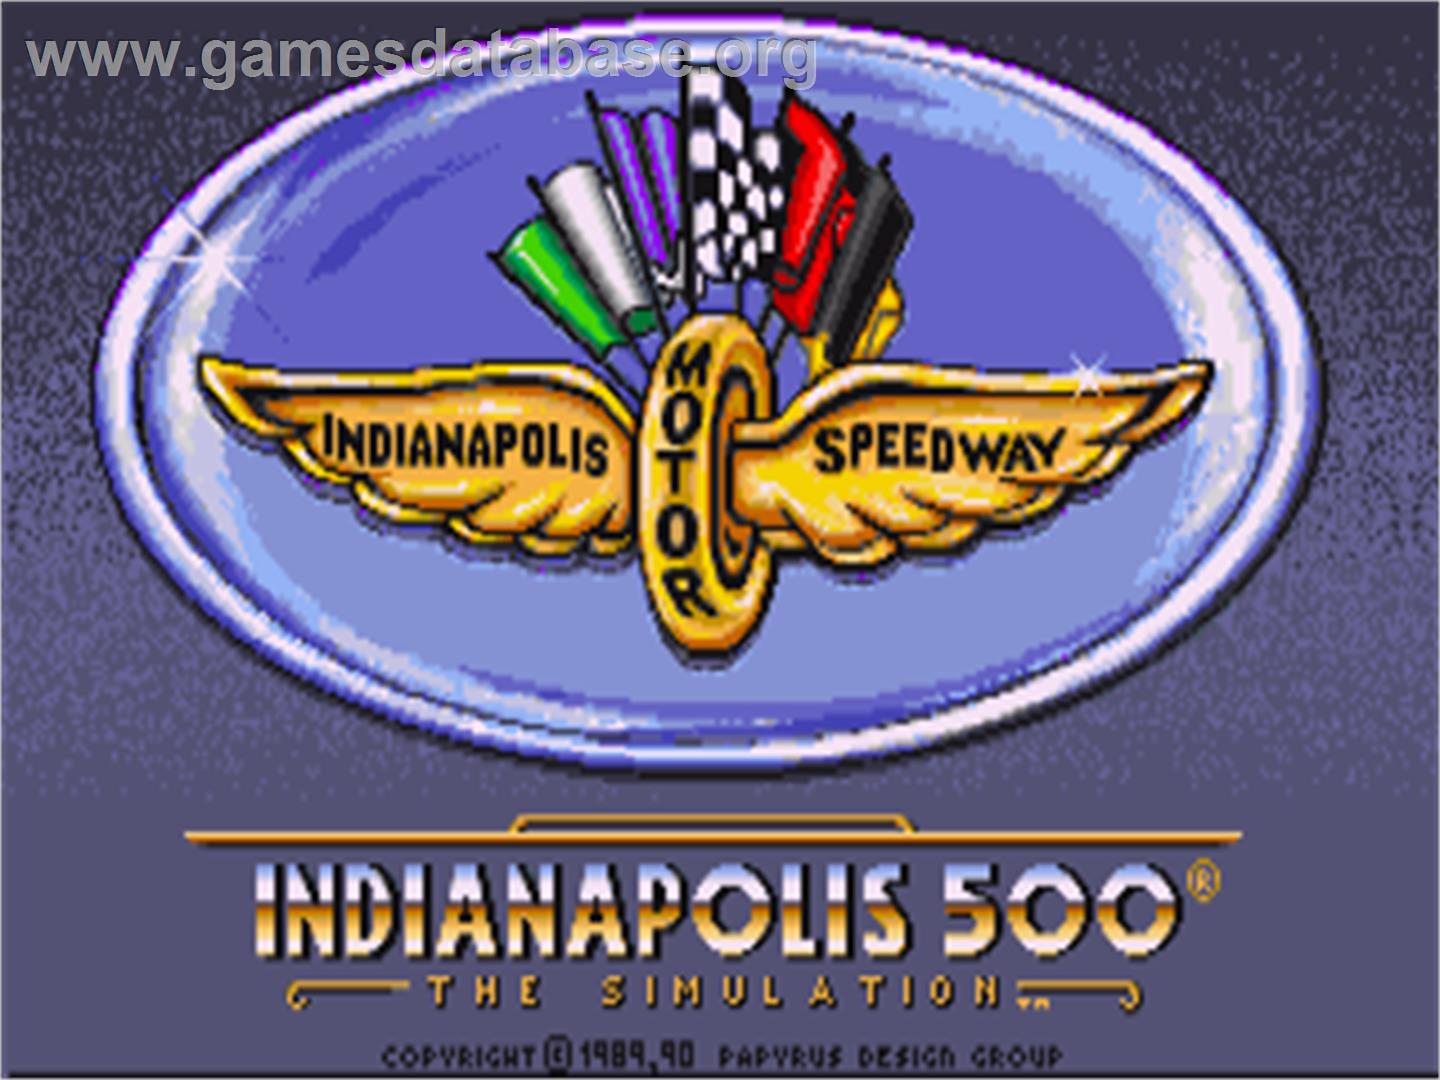 Indianapolis 500: The Simulation - Commodore Amiga - Artwork - Title Screen